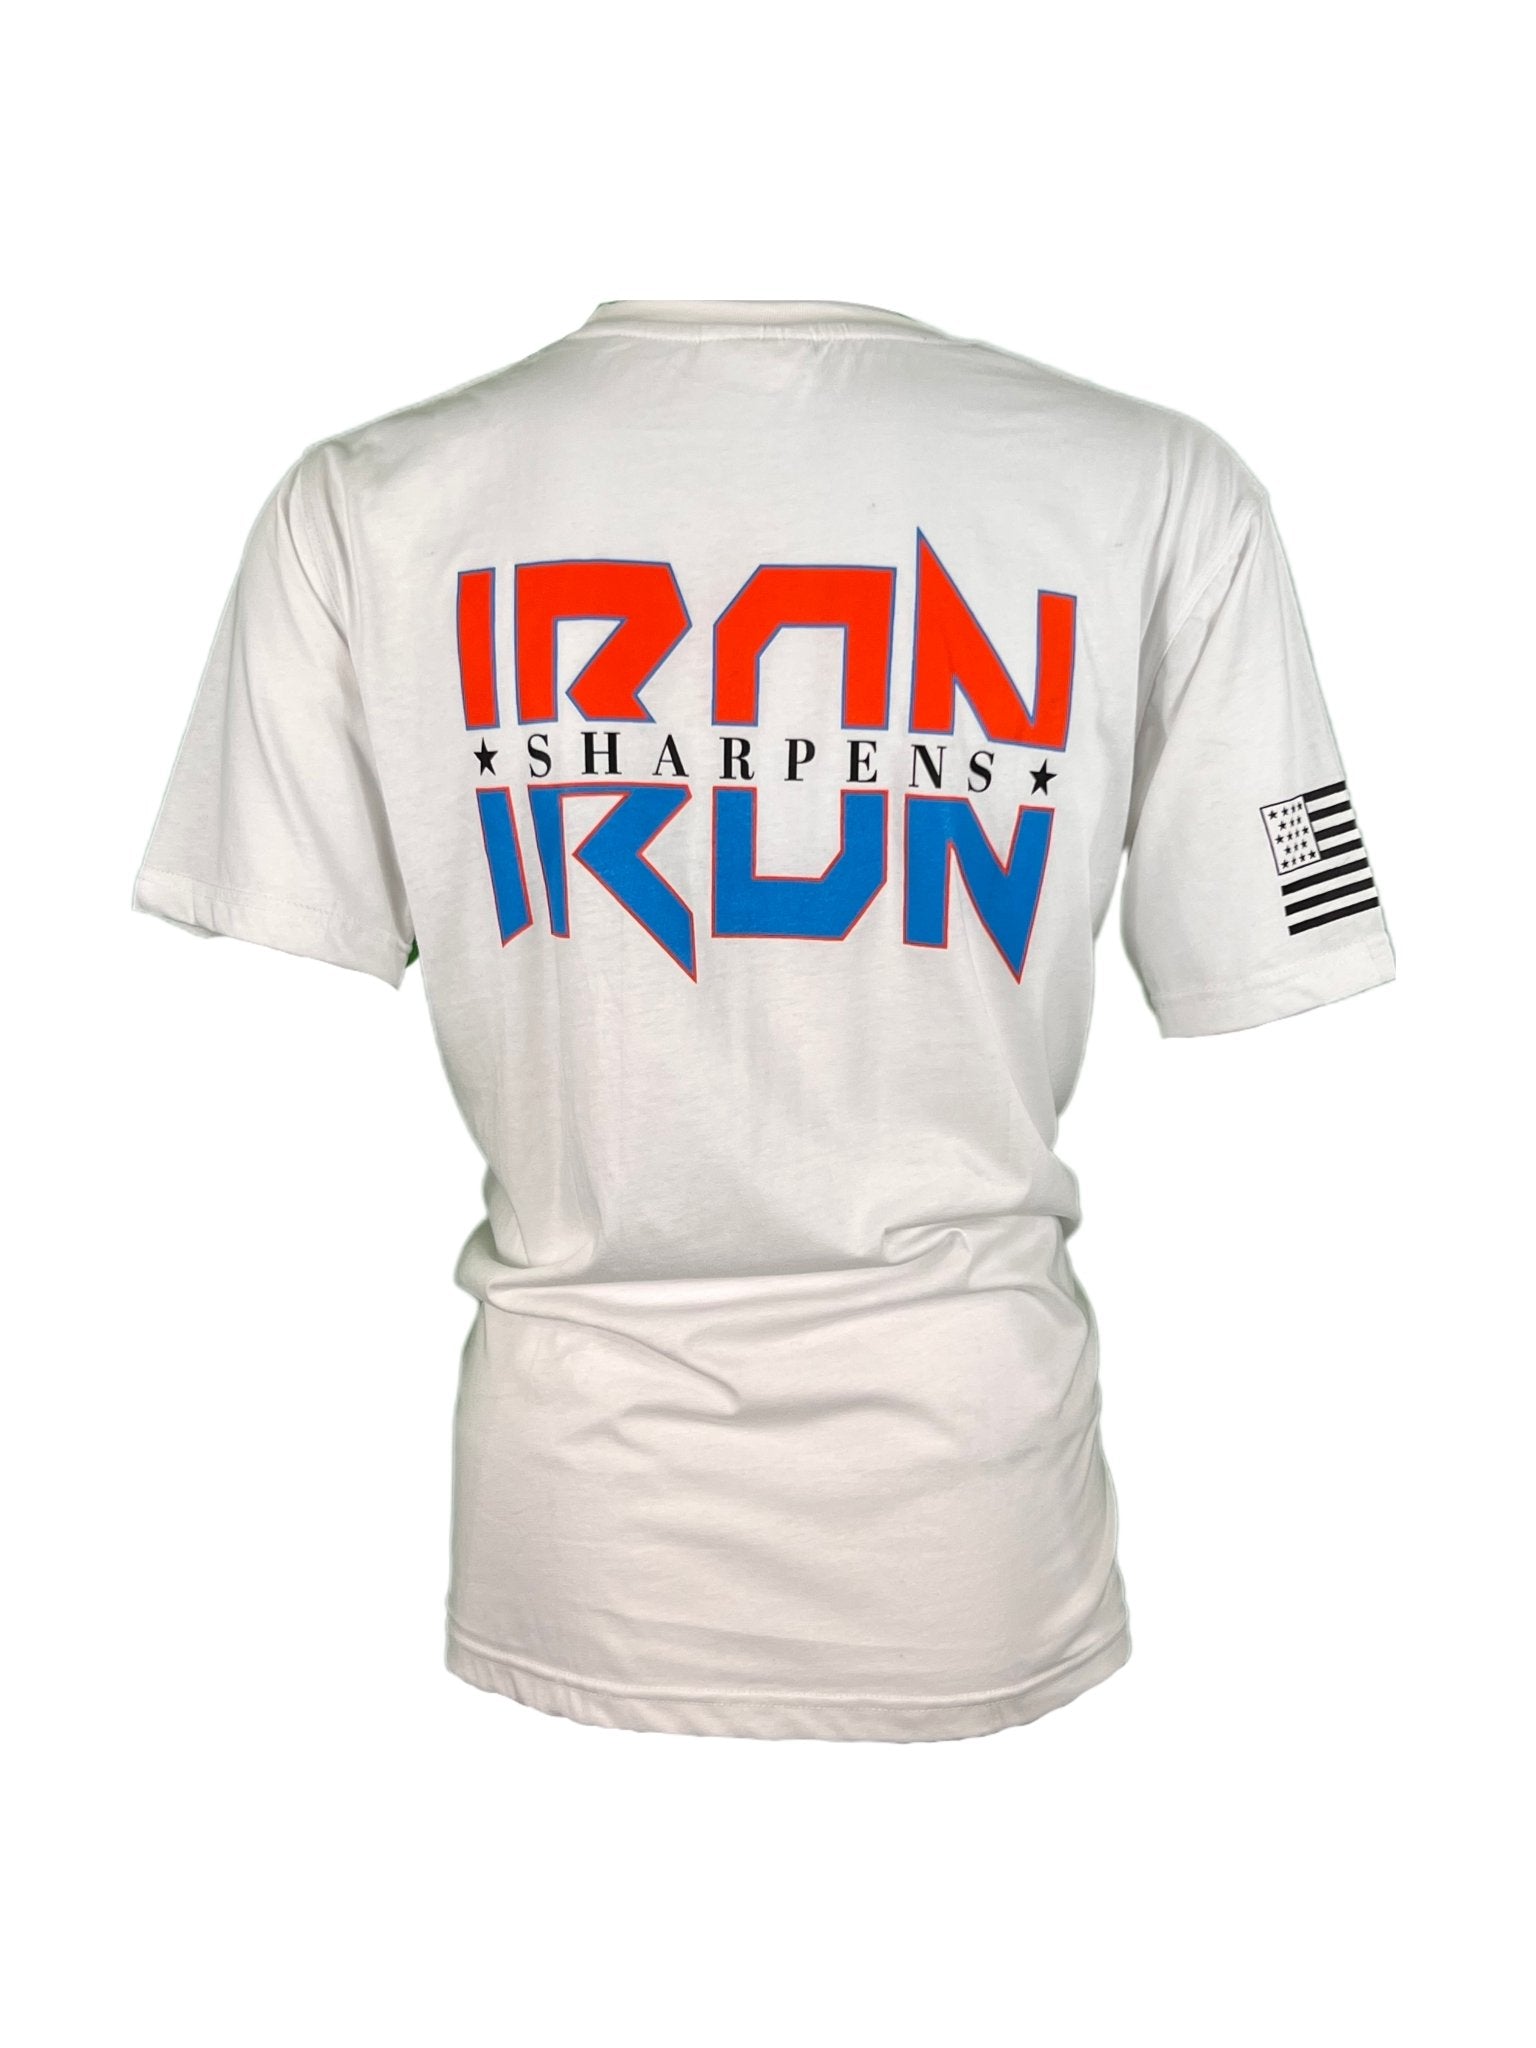 Strong as Iron Tshirt, Caroline Girvan Shirt, Girvan Shirt, Workout Shirt,  Iron Series Tee, Epic Shirt, Fitness T-shirt, Girvanator Shirt 